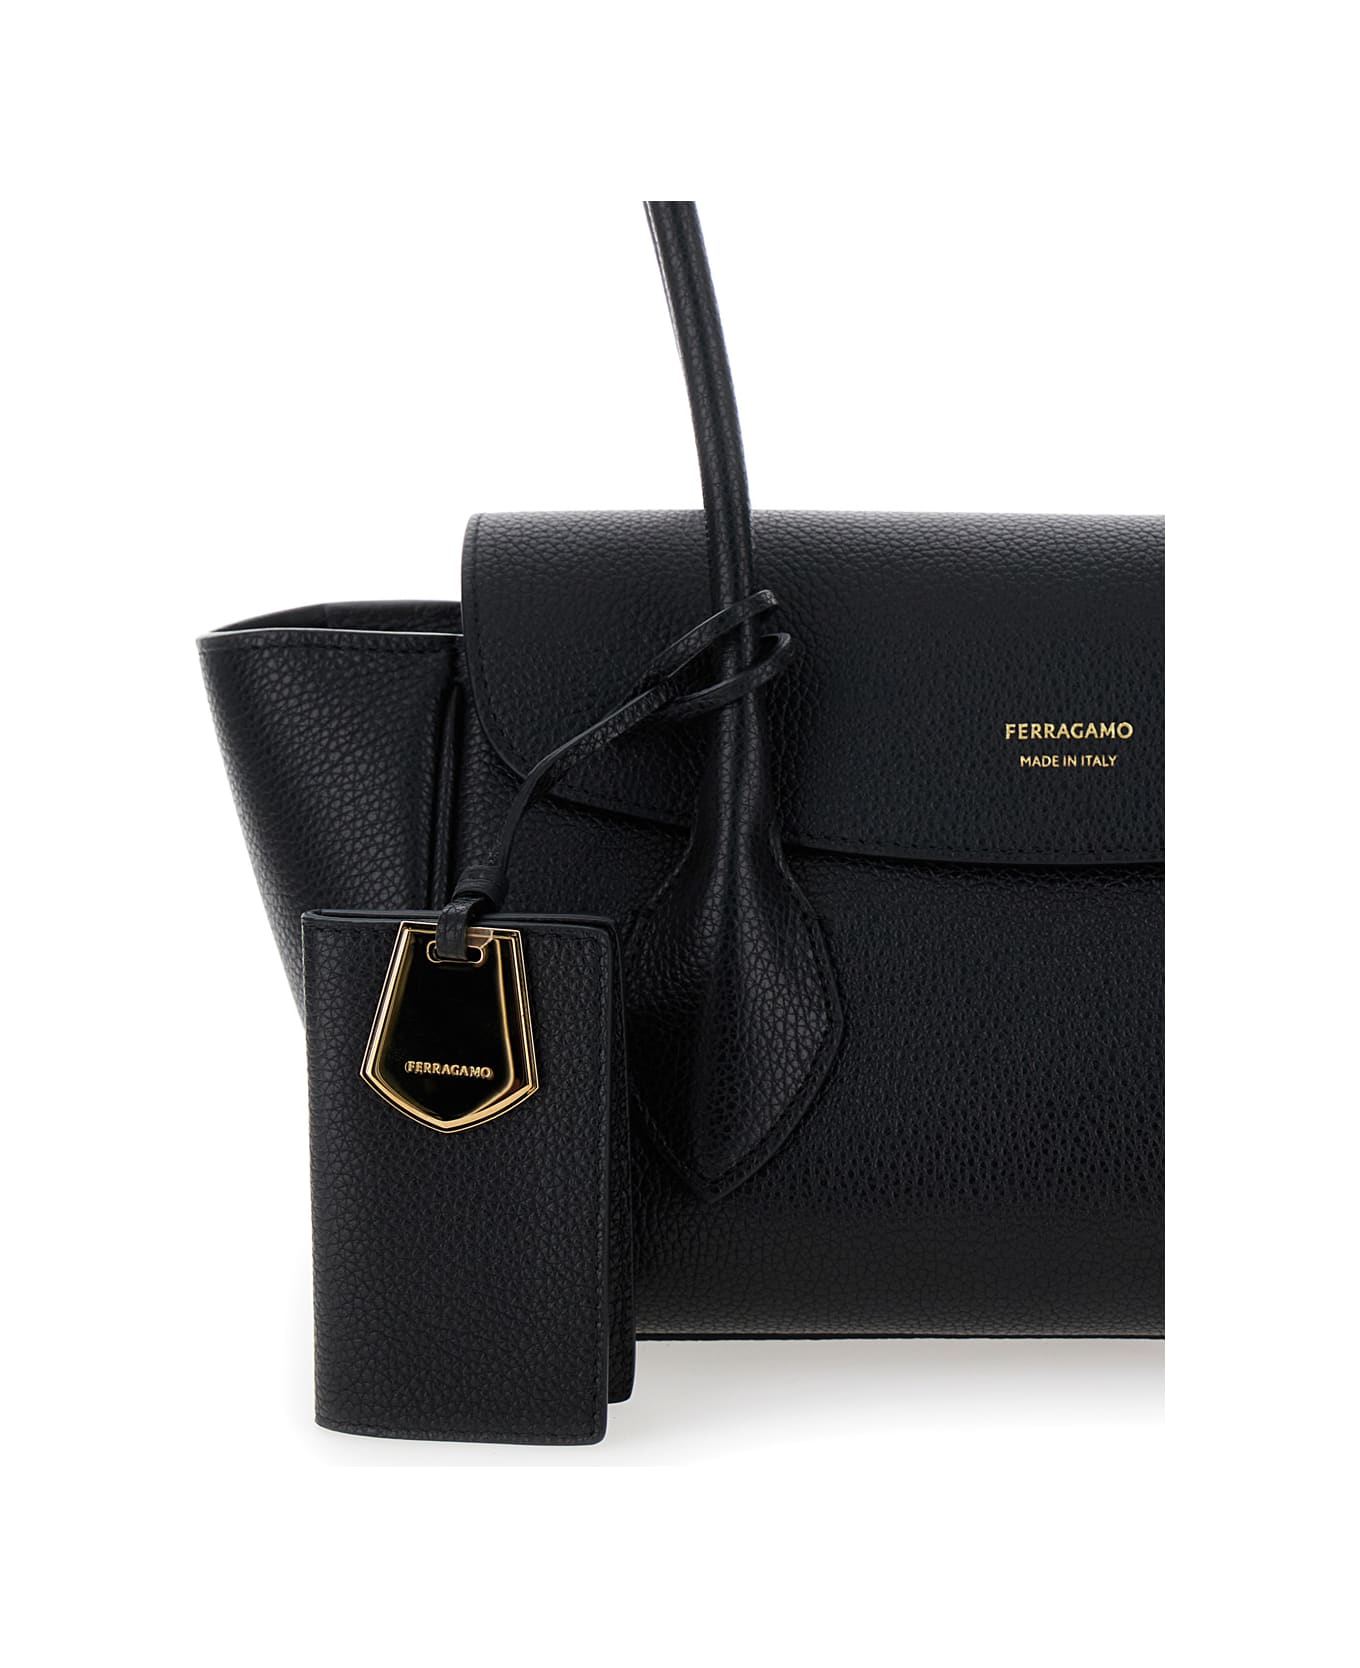 Ferragamo 'east-west S' Black Handbag With Logo Detail In Hammered Leather Woman - Black トートバッグ